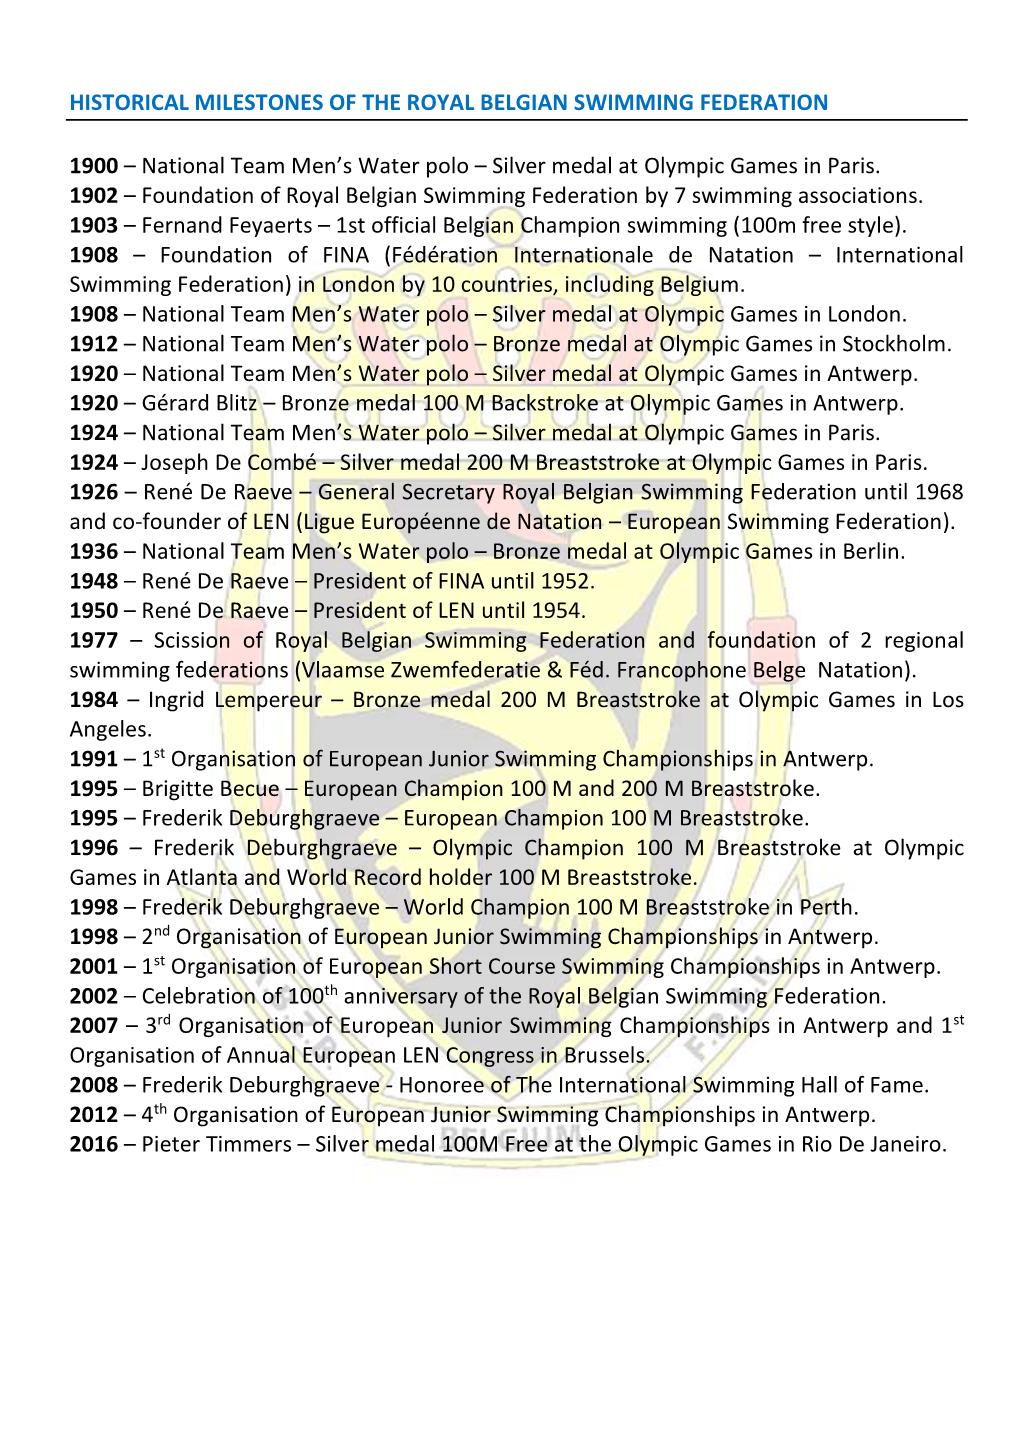 Historical Milestones of the Royal Belgian Swimming Federation